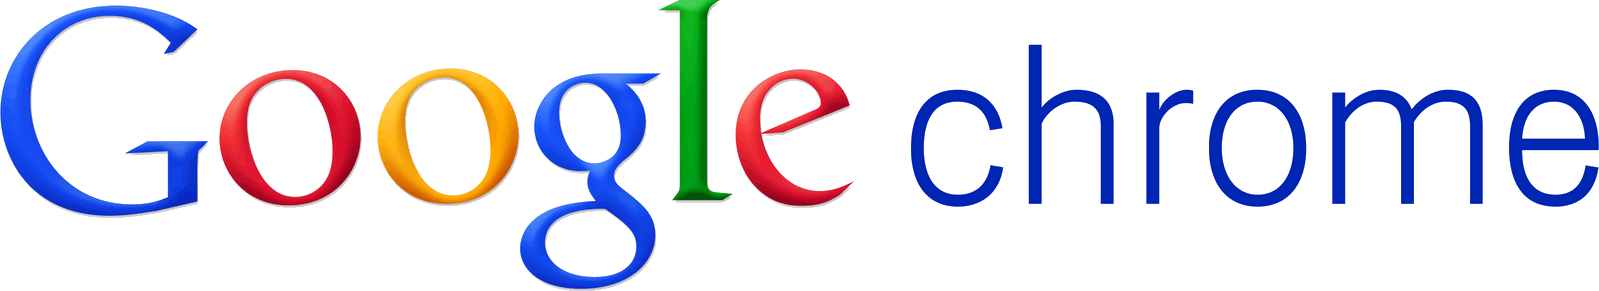 Original Google Logo - File:Google logo and Chrome wordmark.png - Wikimedia Commons